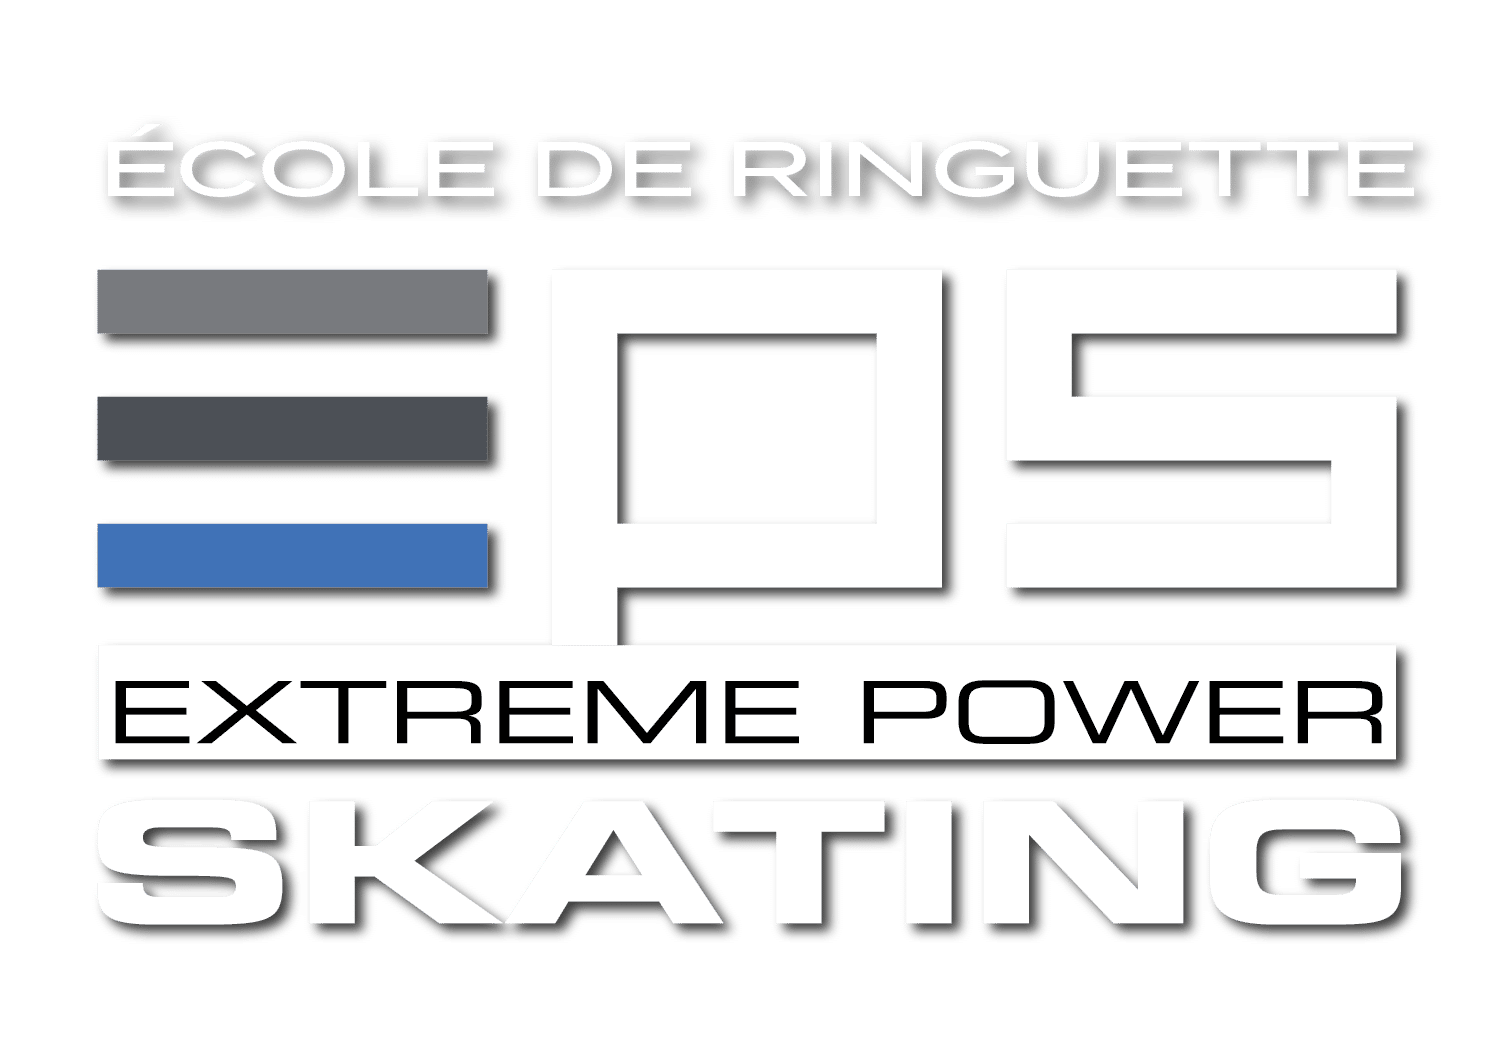 Extreme Power Skating